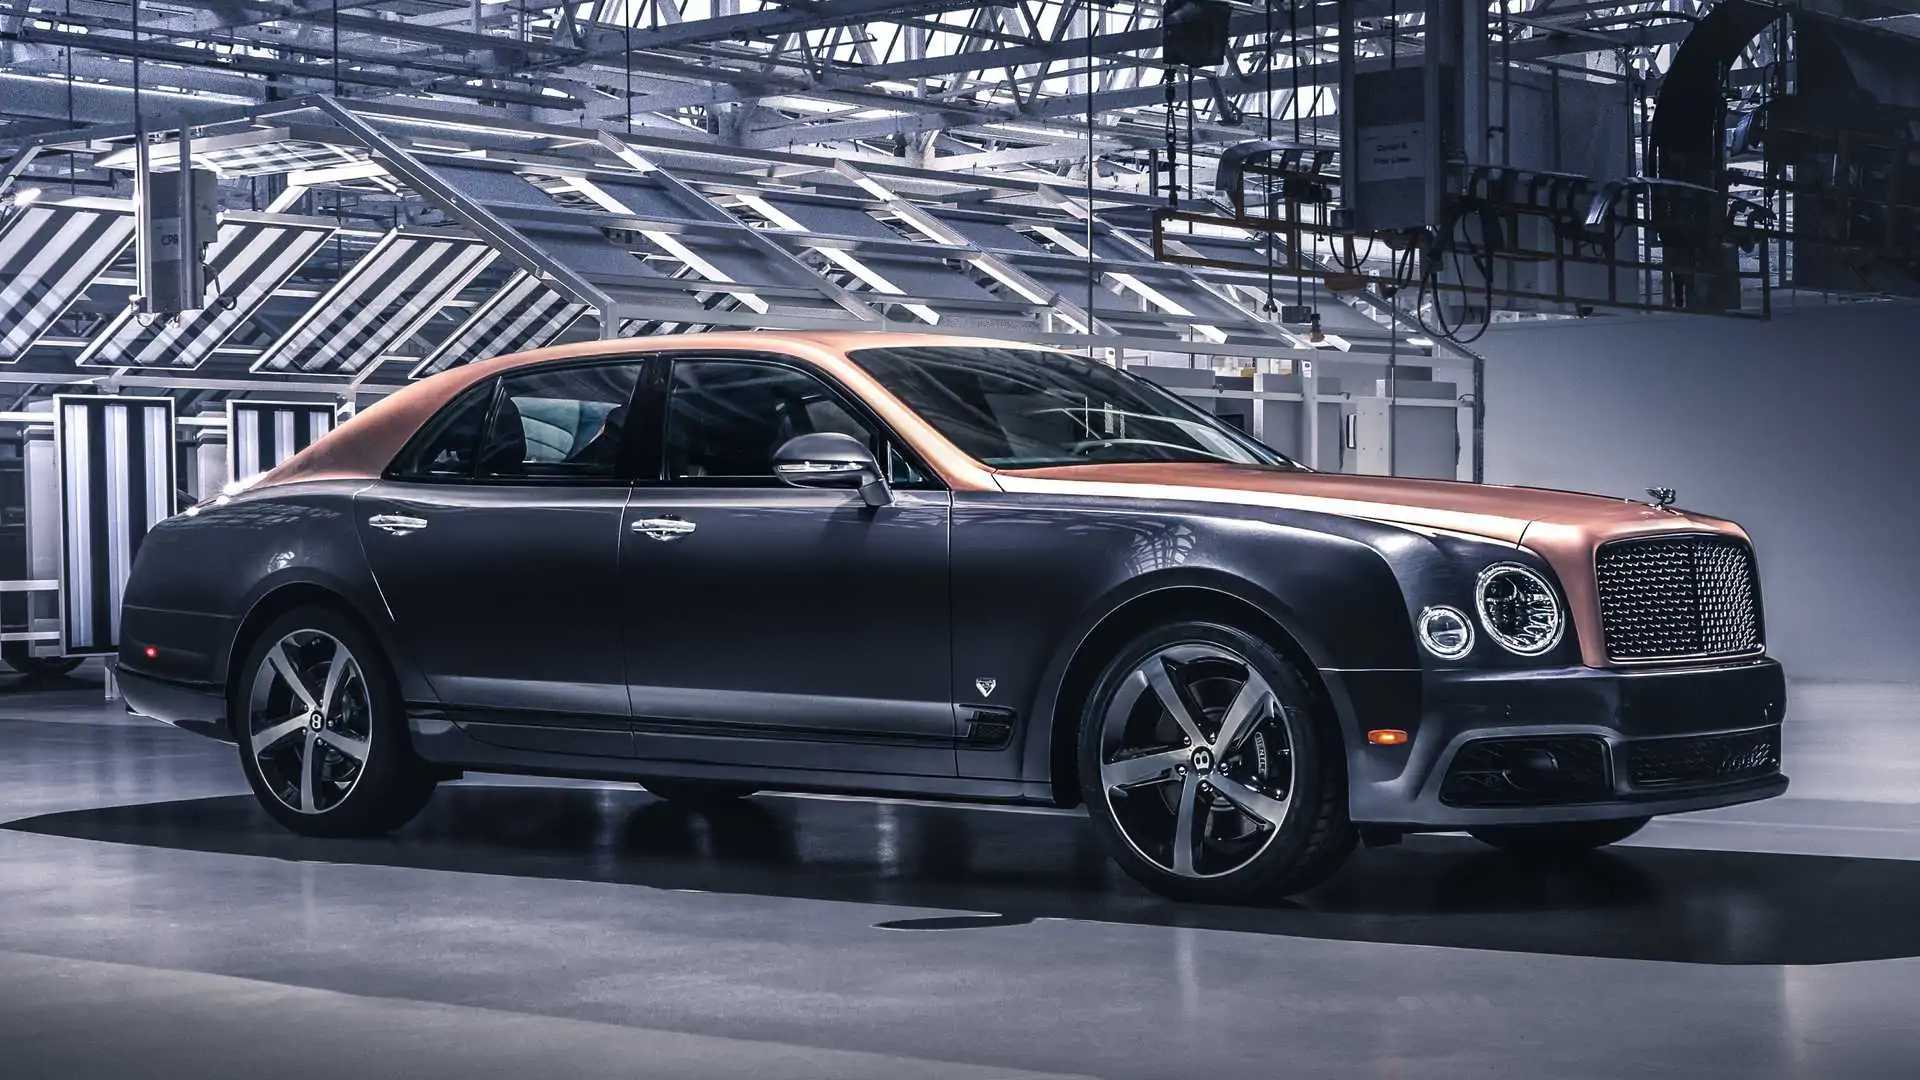 Bentley Mulsanne News and Reviews | Motor1.com